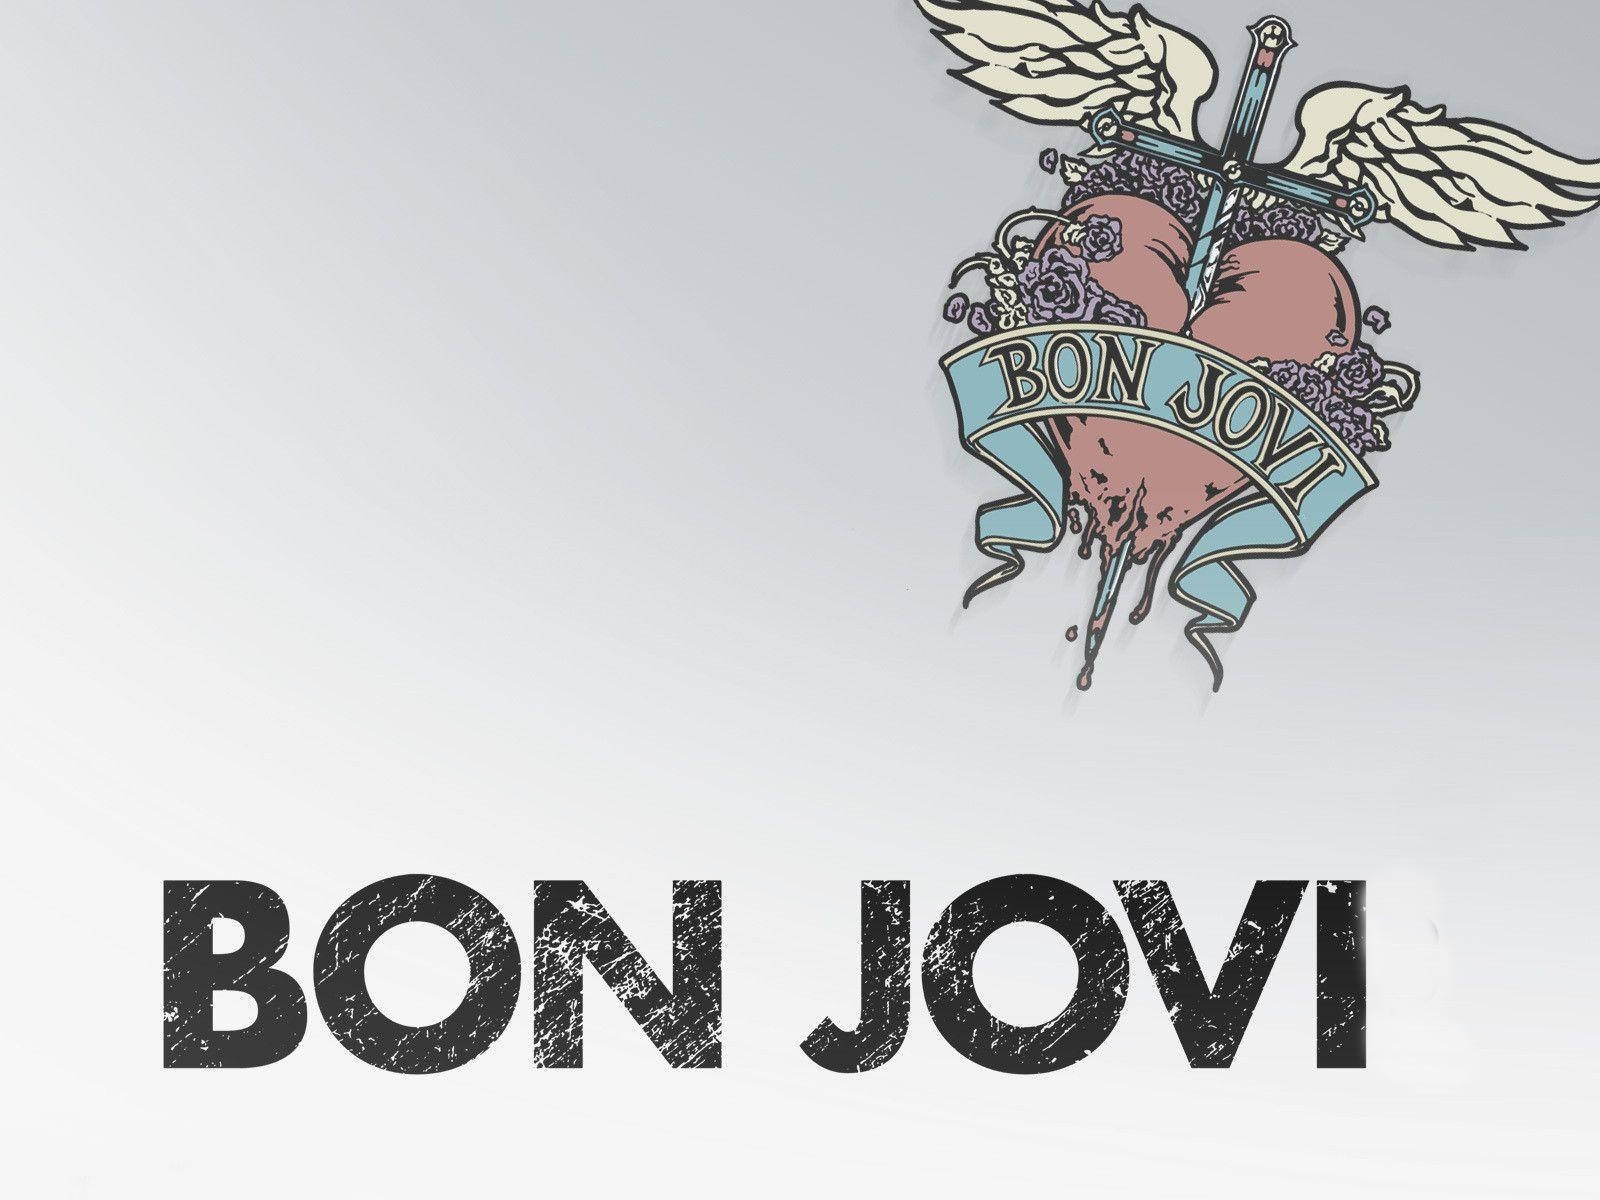 American Rock Band Bon Jovi Logo Fanart Wallpaper